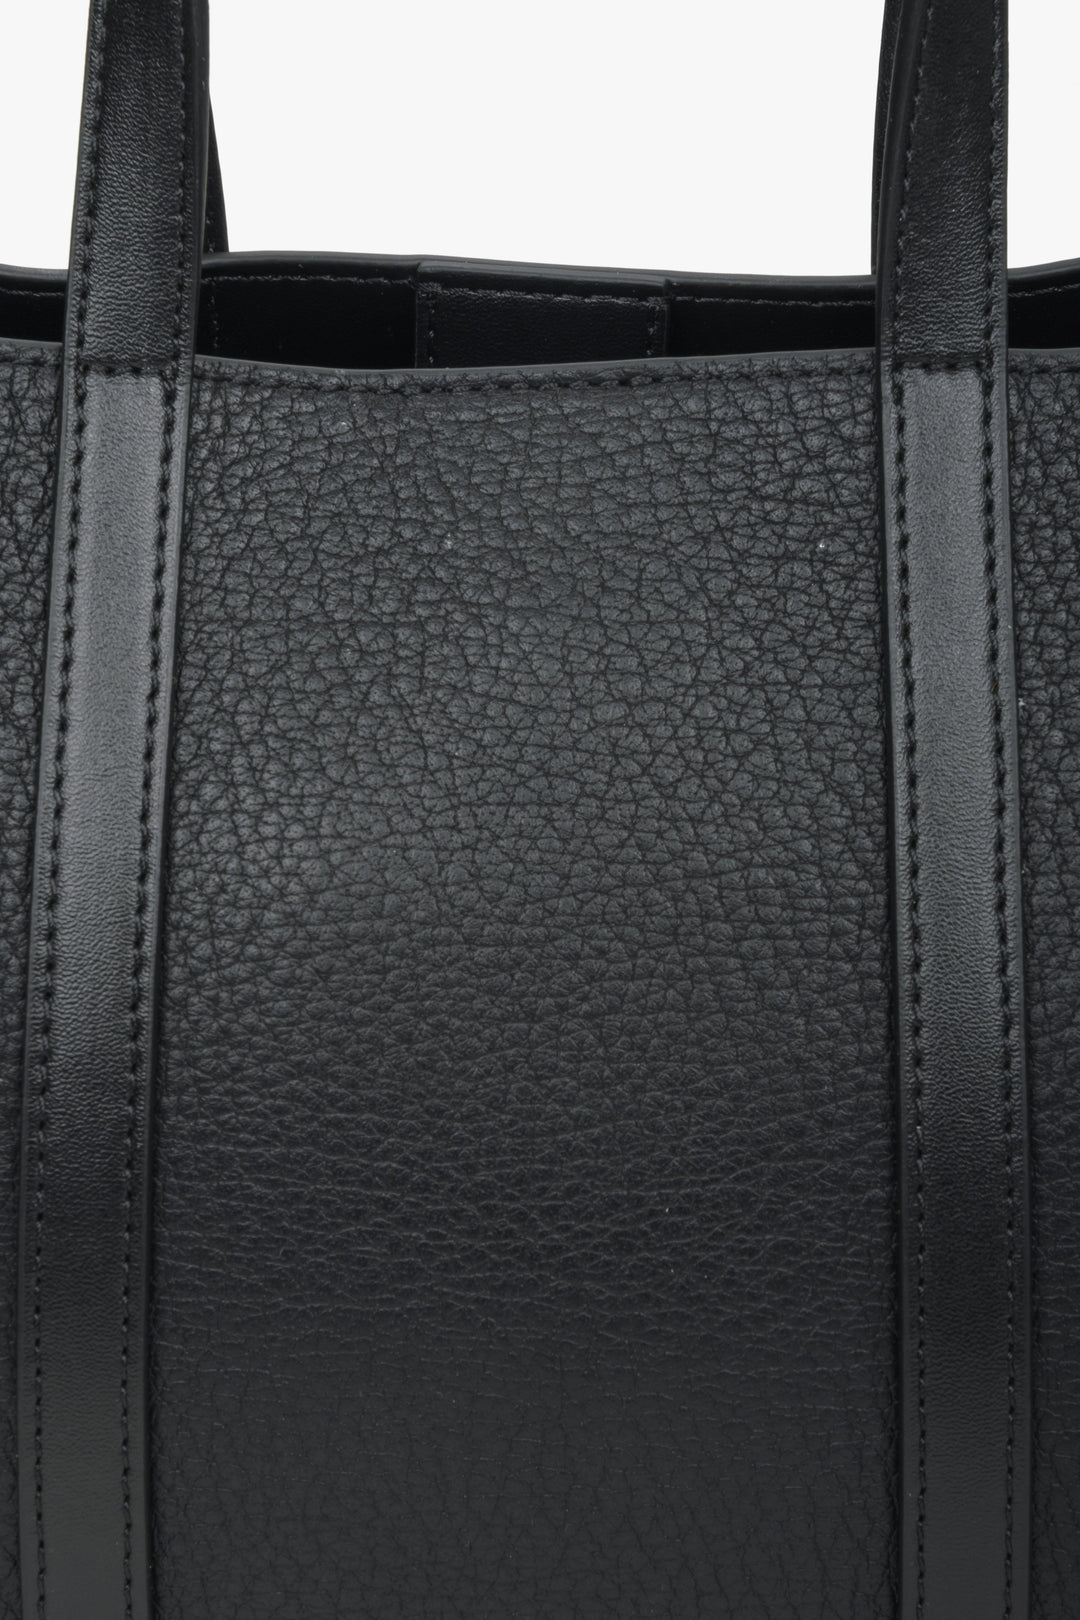 Women's black leather shopper bag by Estro - close-up on the details.